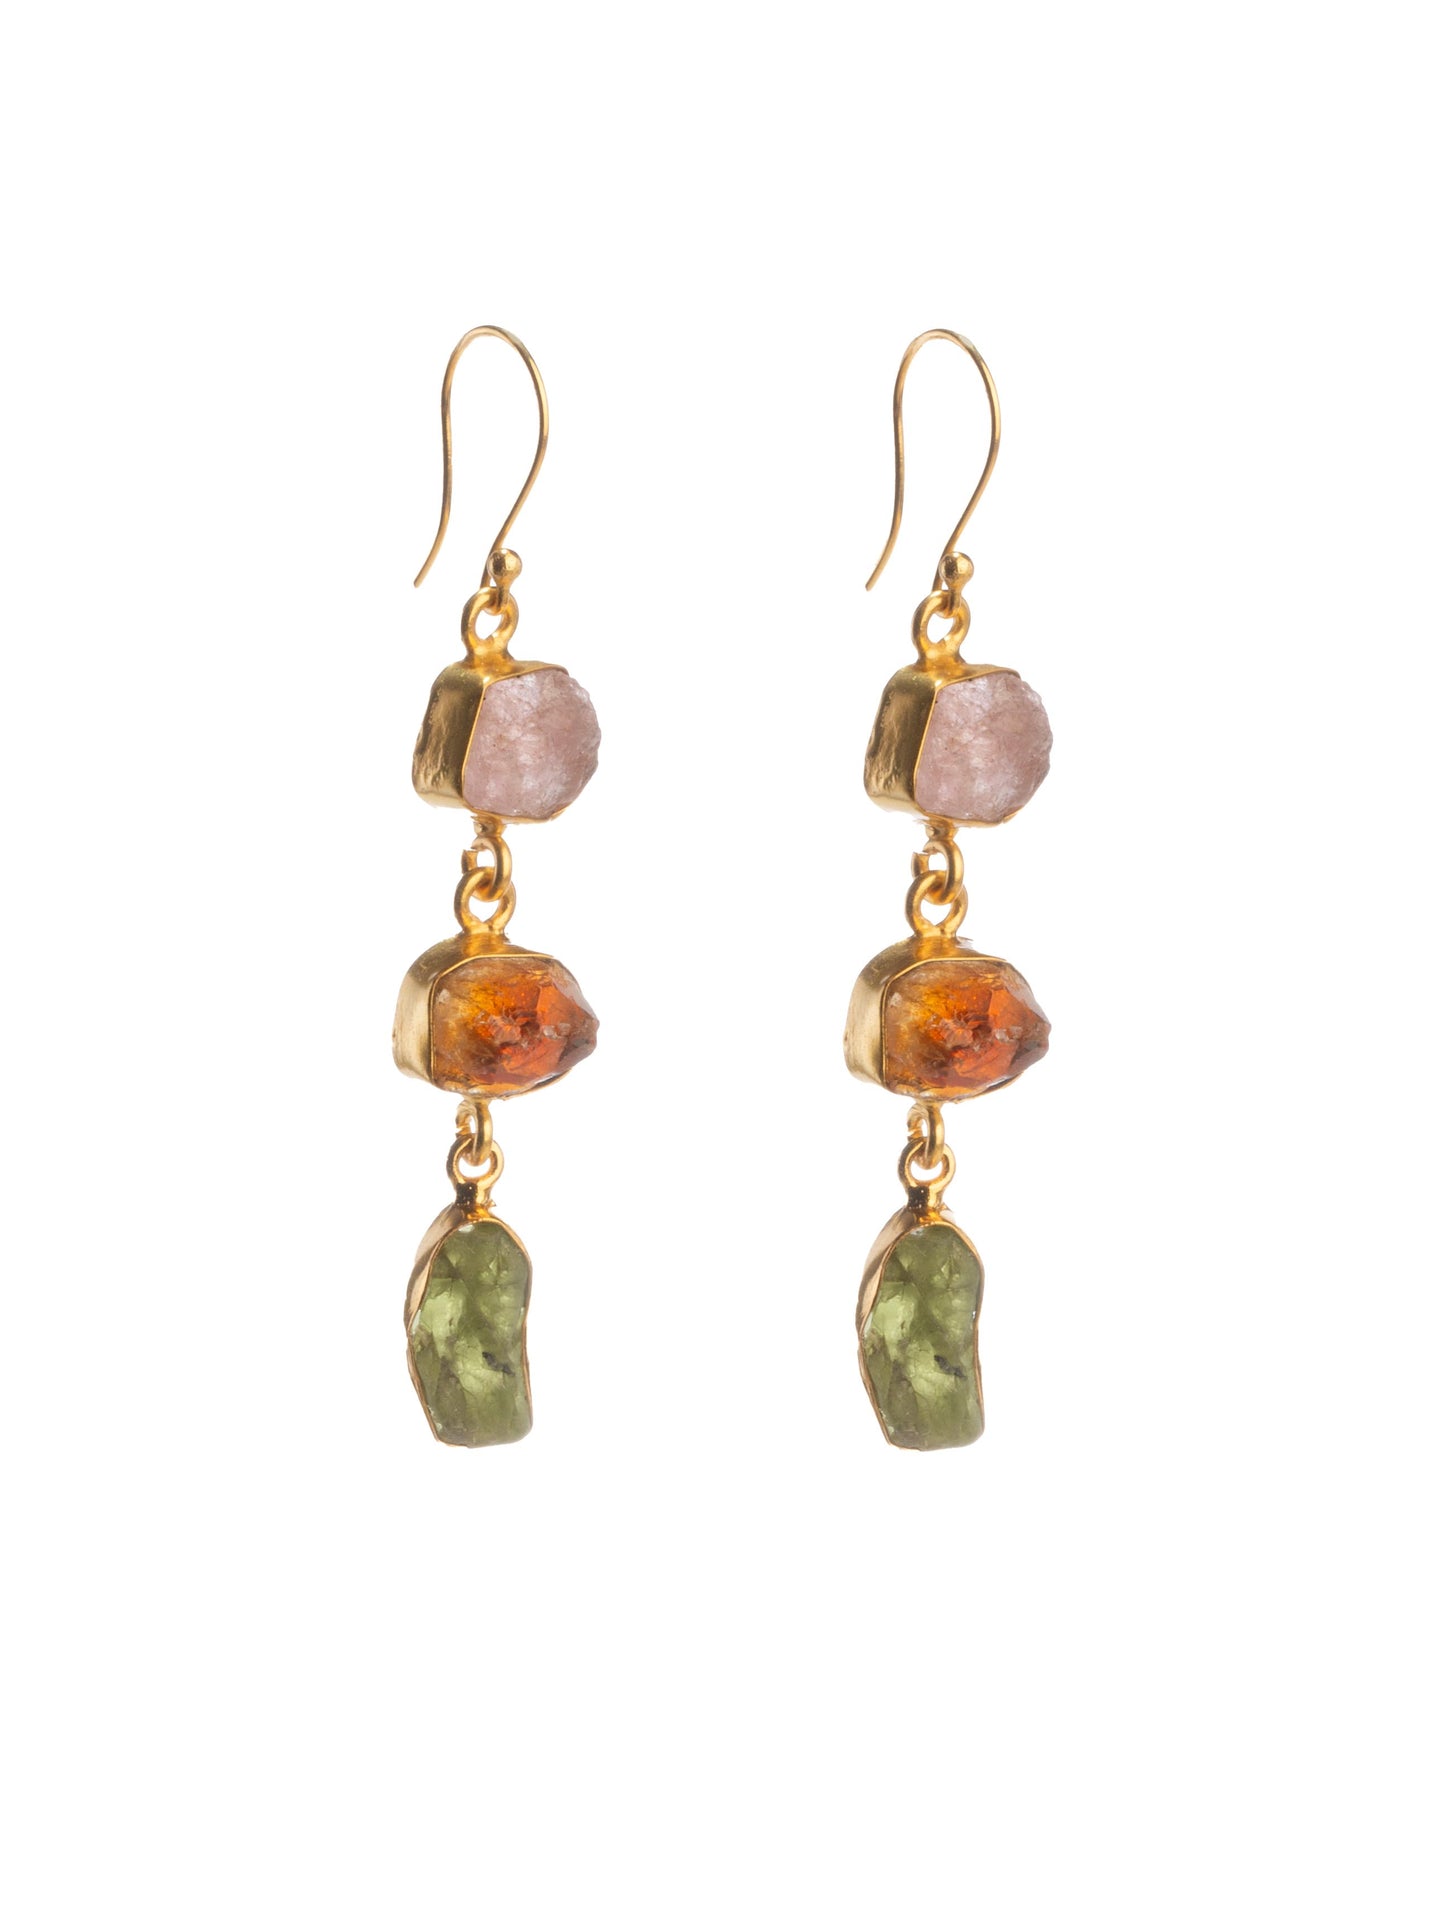 Gold Luxe earrings - triple drop gems  rose quartz, citrine & peridot